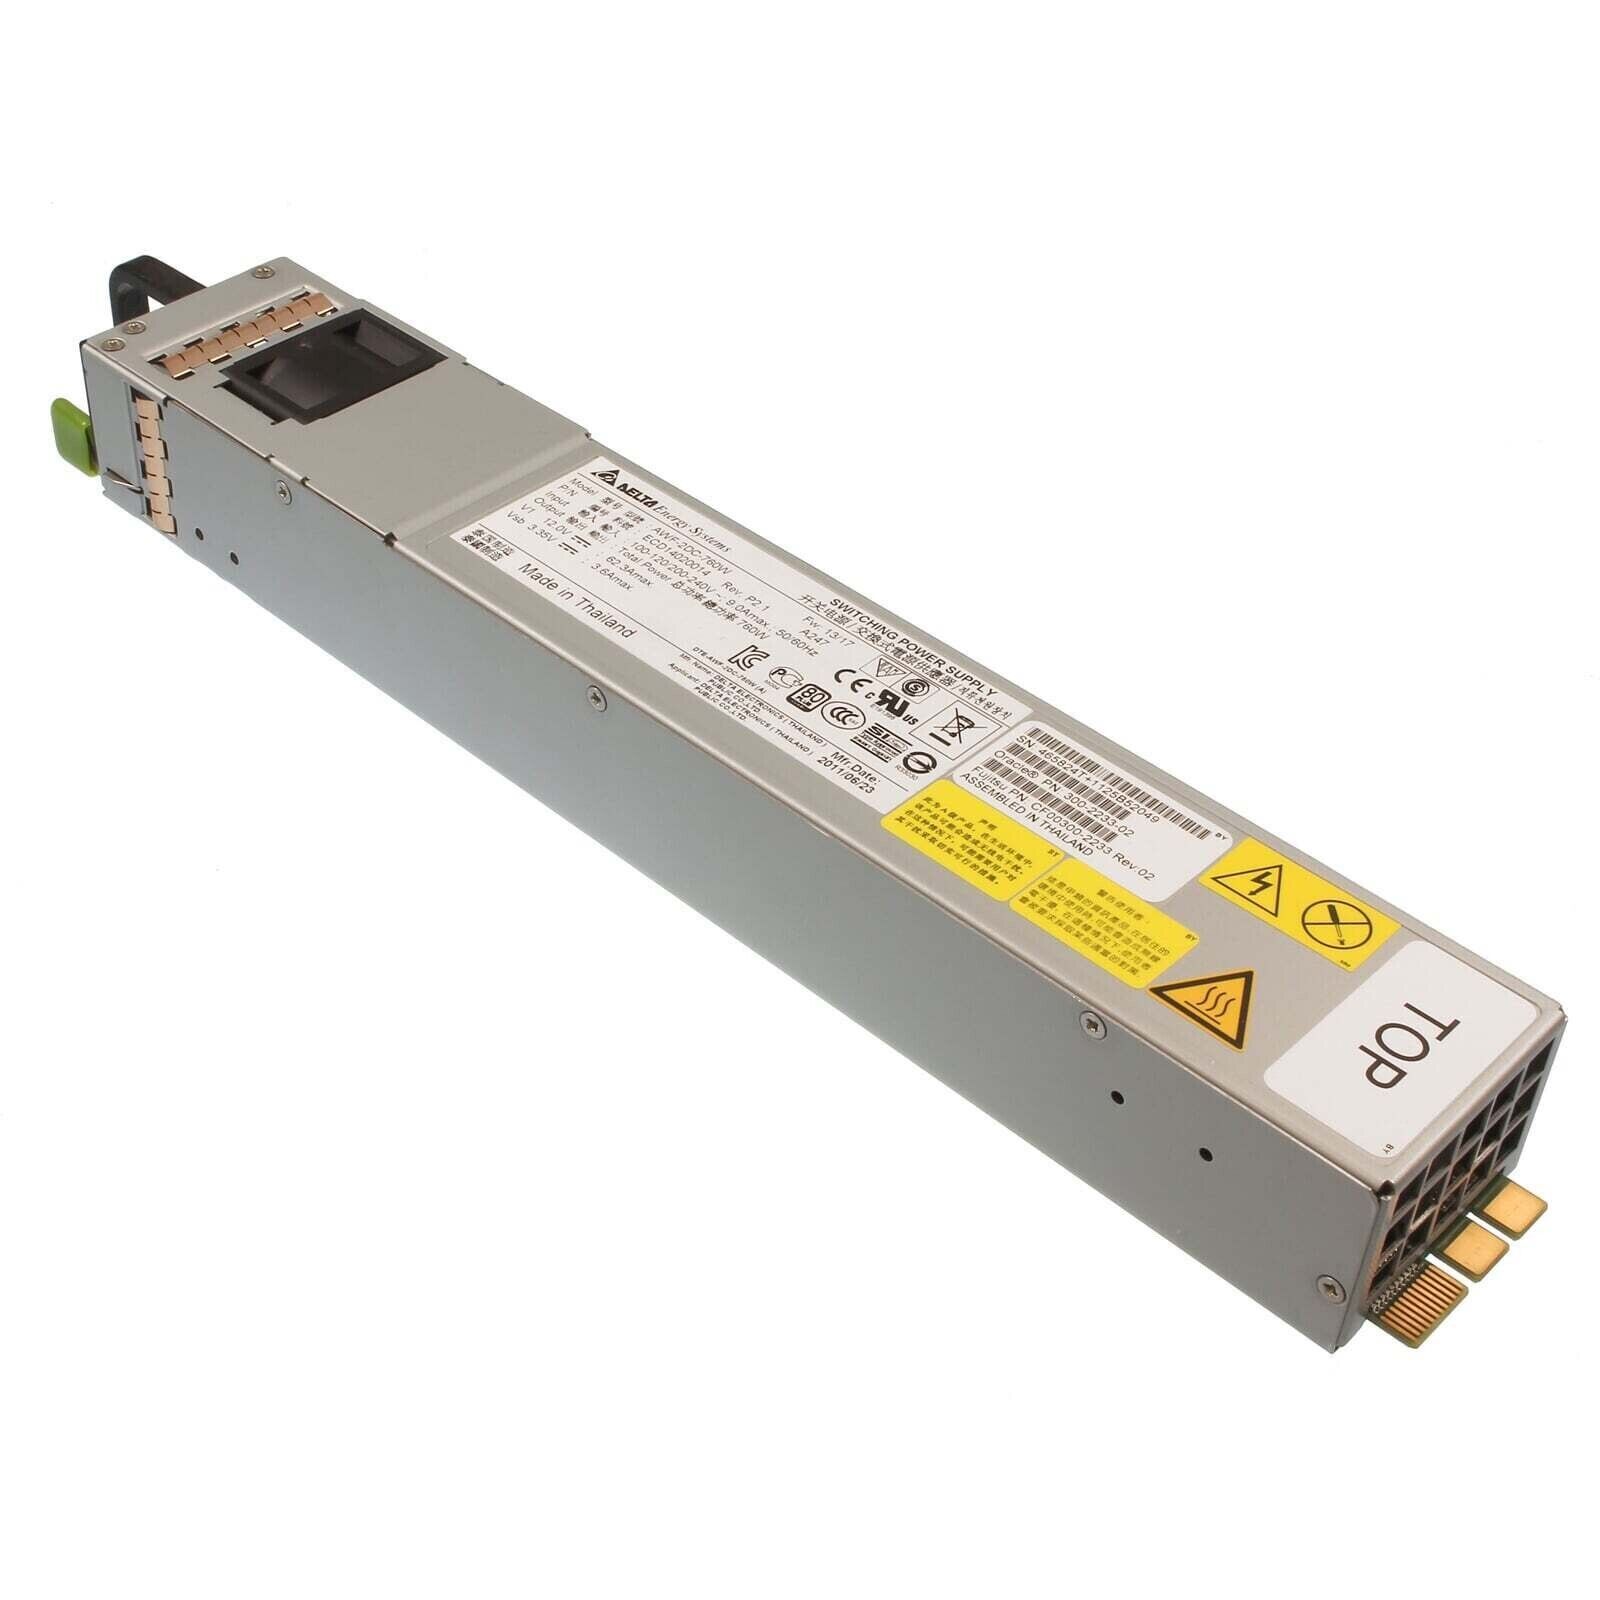 Sun 300-2233-02 760W Delta AWF-2DC-760W AC Power Supply for Fire X4170 M2 Server